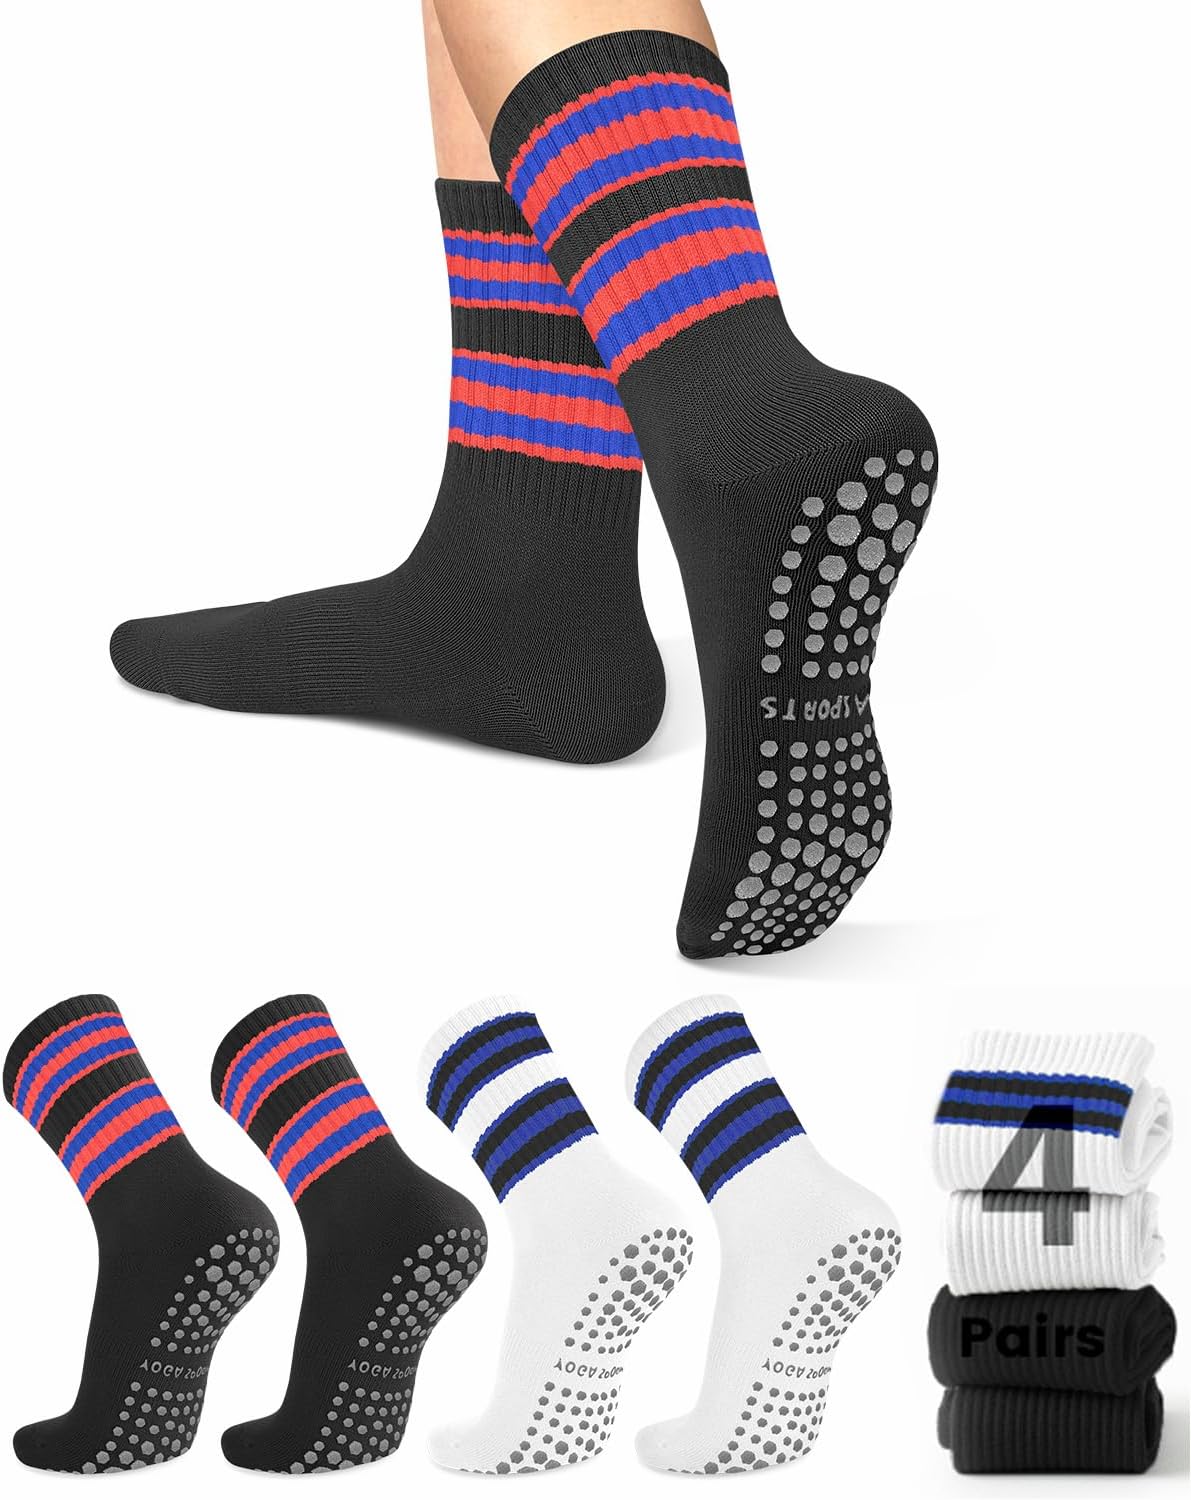  yeuG Grip Socks for Women Pilates Socks with Grips